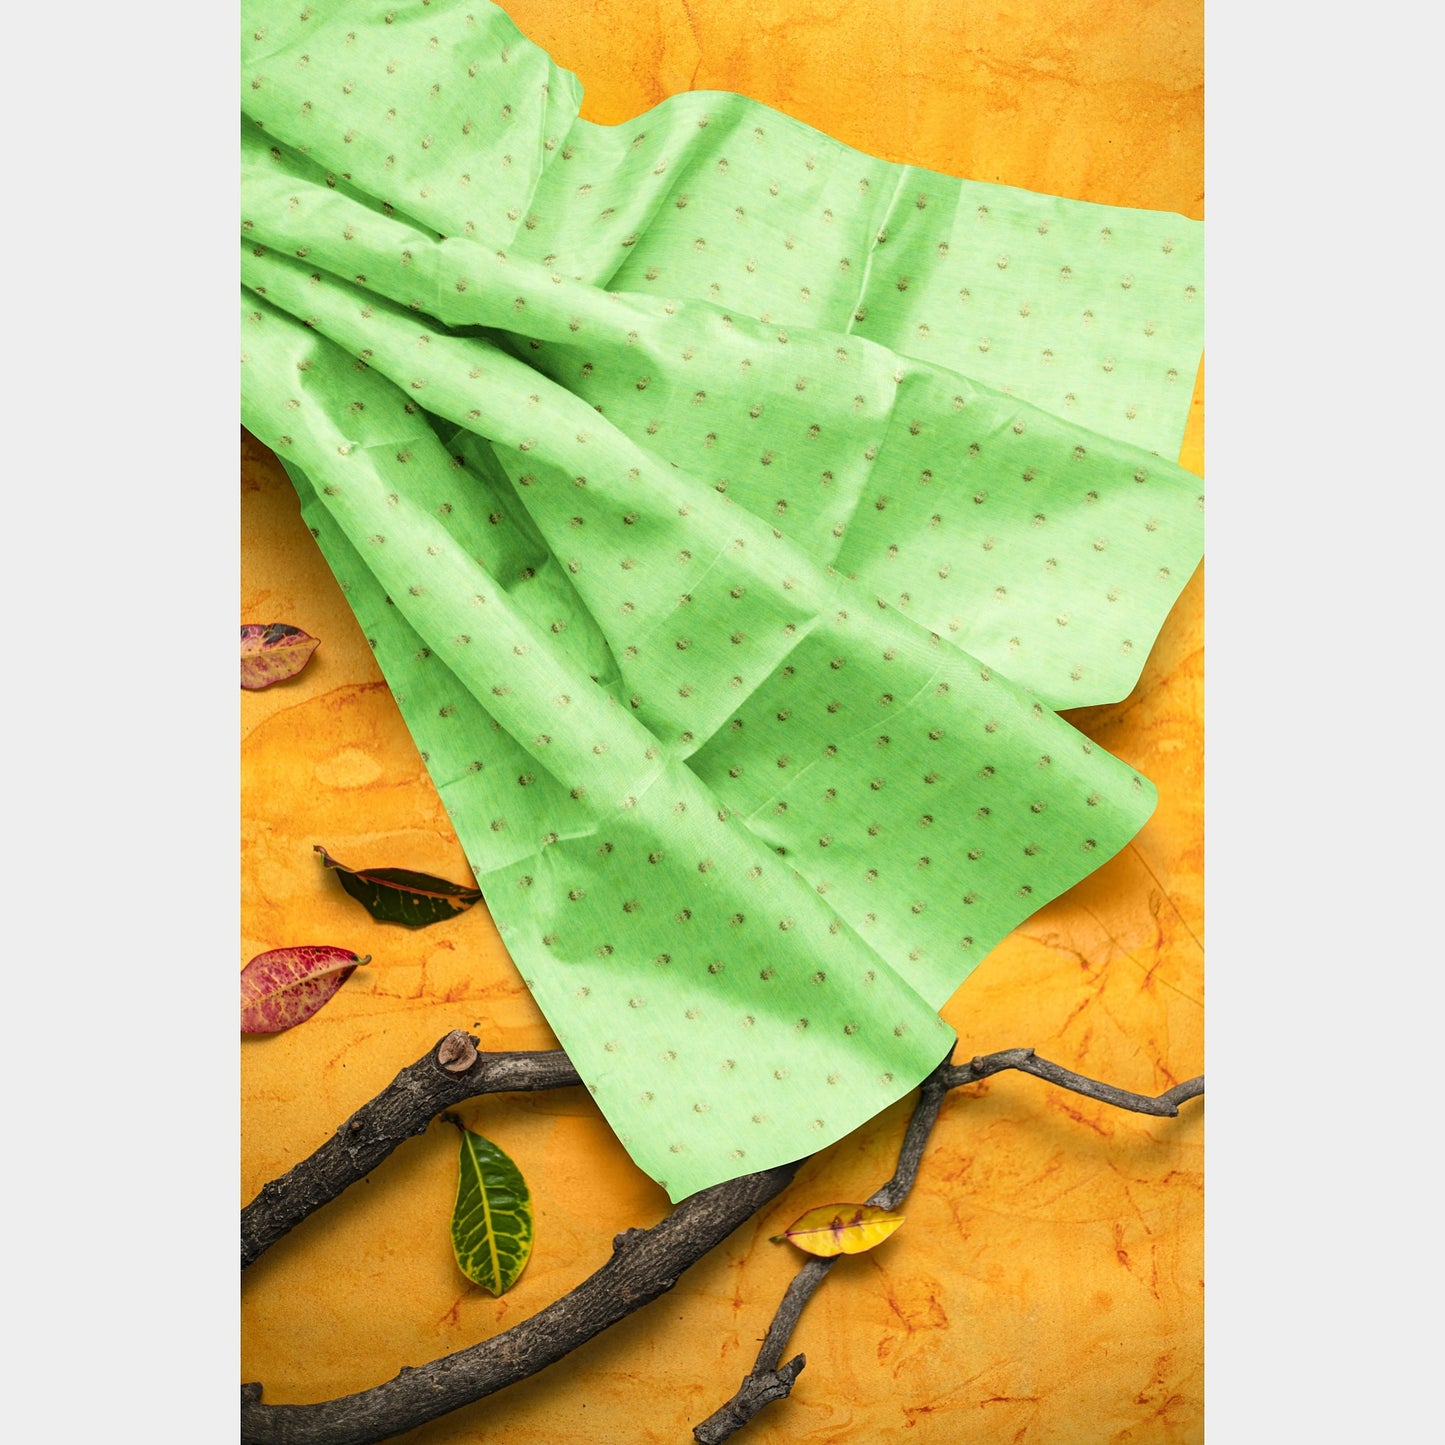 Pistachio Green With Gold Zari Floral Brocade Fabric Trade UNO